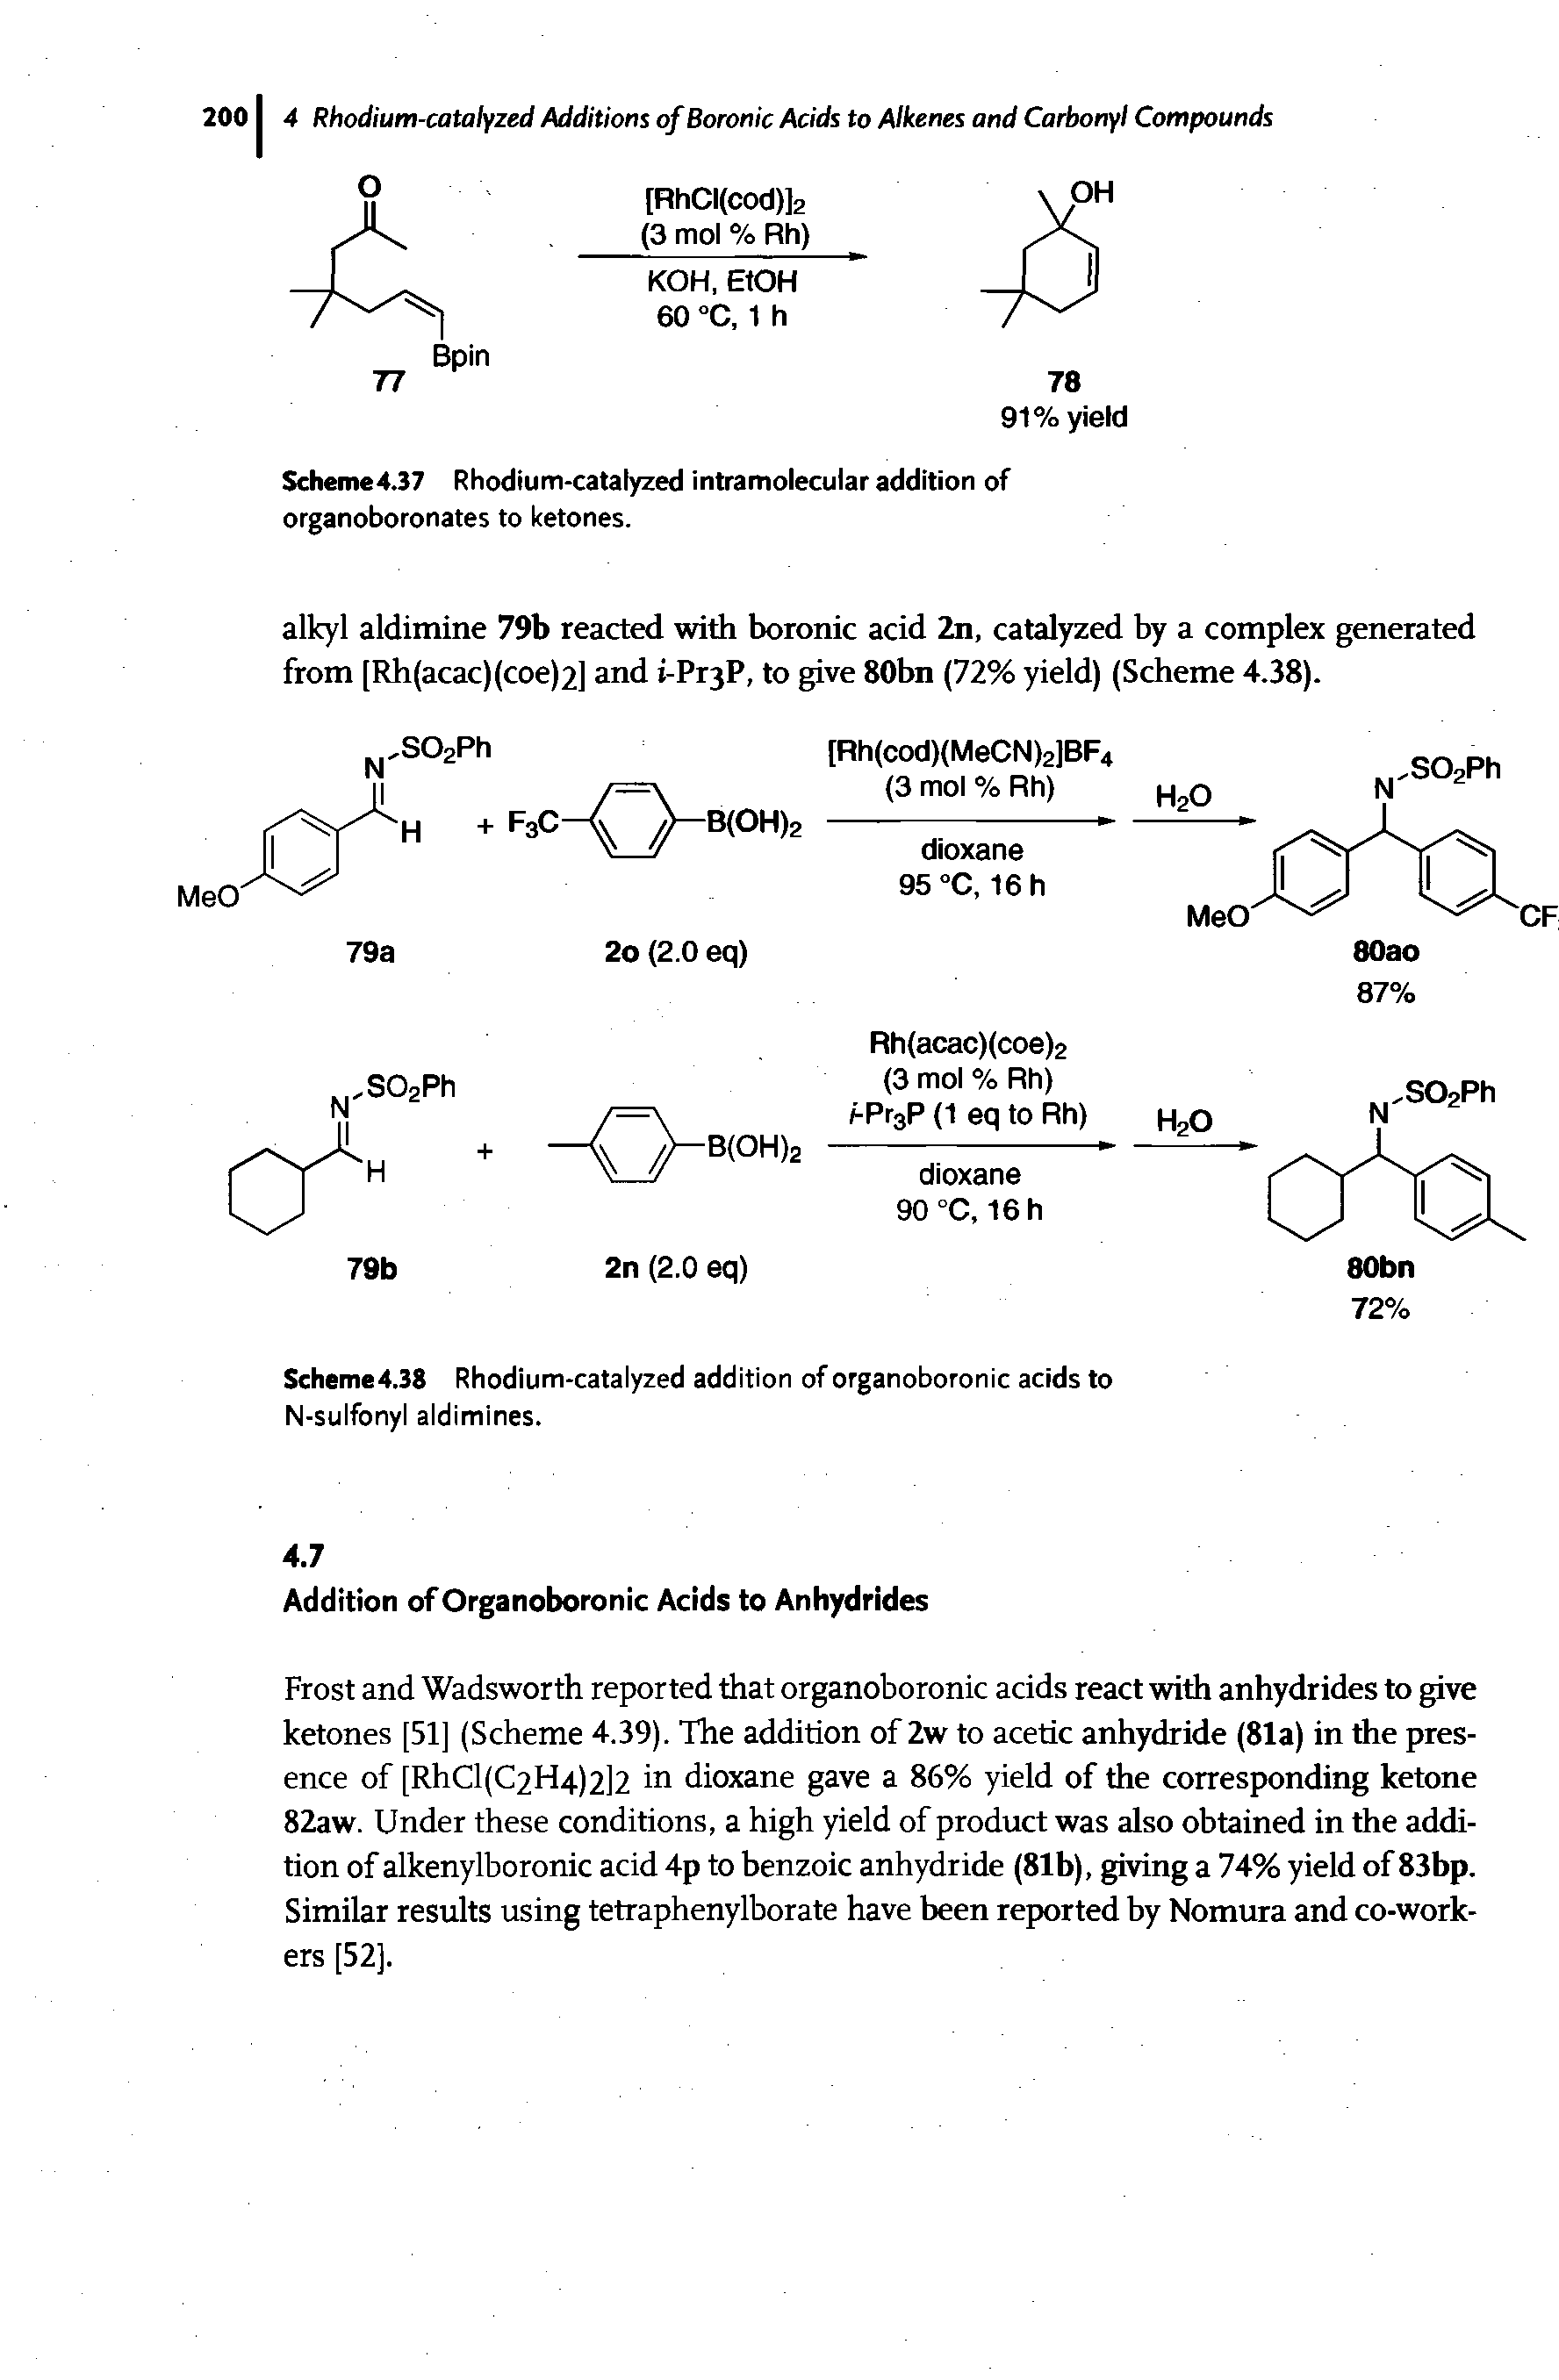 Scheme4.38 Rhodium-catalyzed addition of organoboronic acids to N-sulfonyl aldimines.